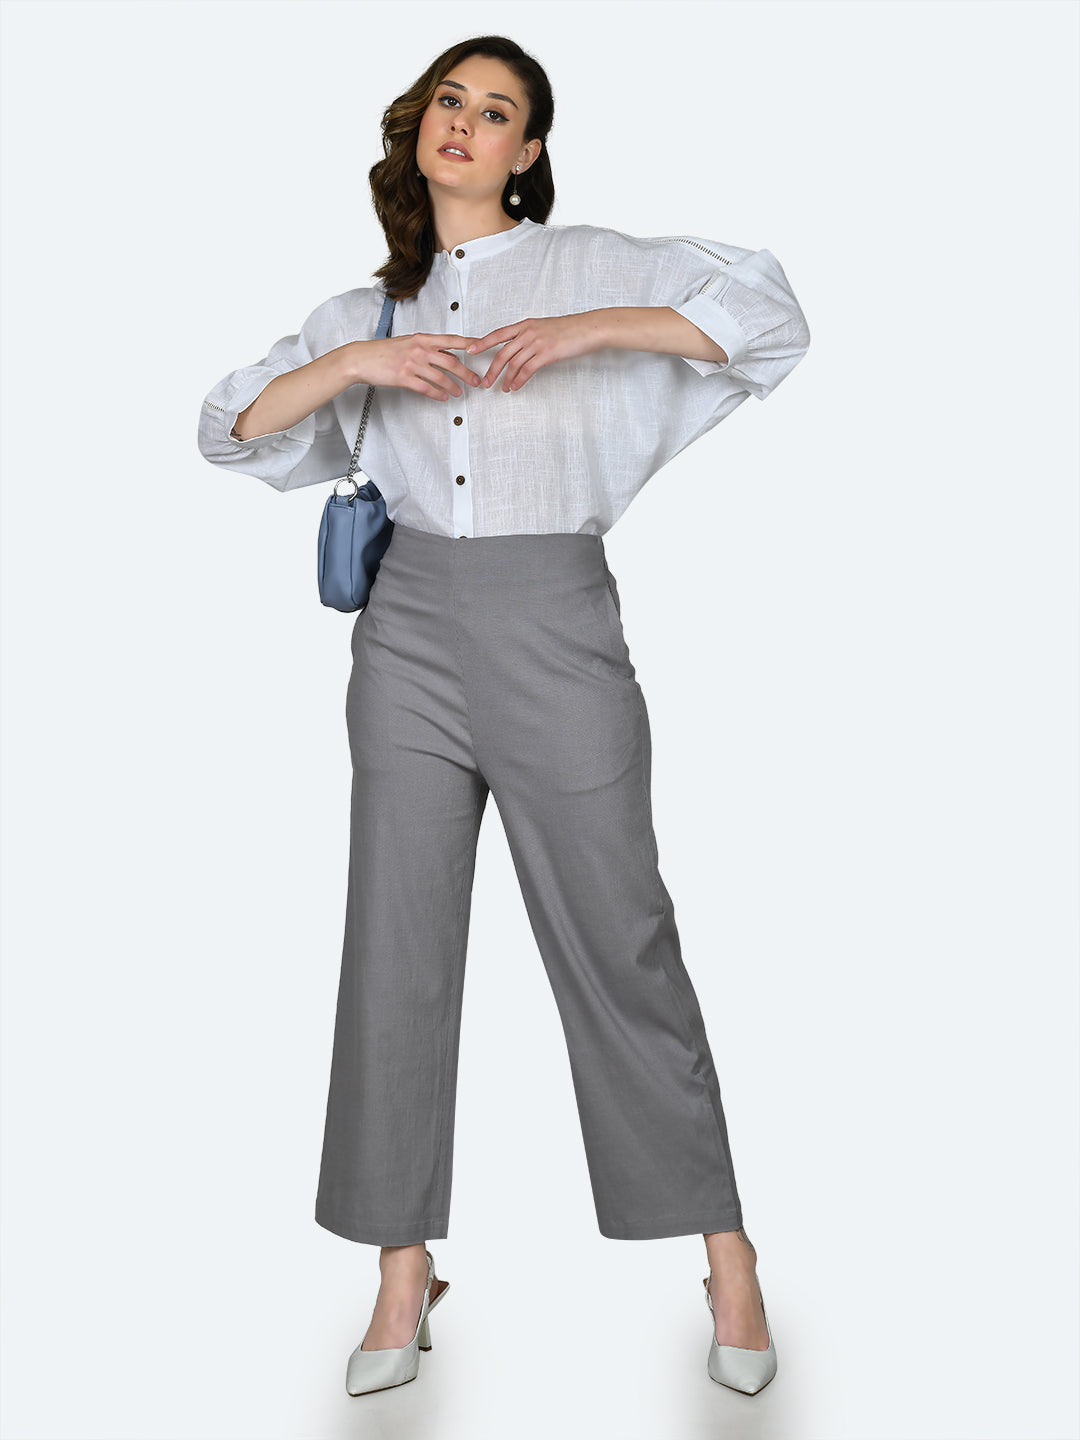 Cement Grey Cotton Trouser For Women | Solid Regular Fit | सादा /SAADAA